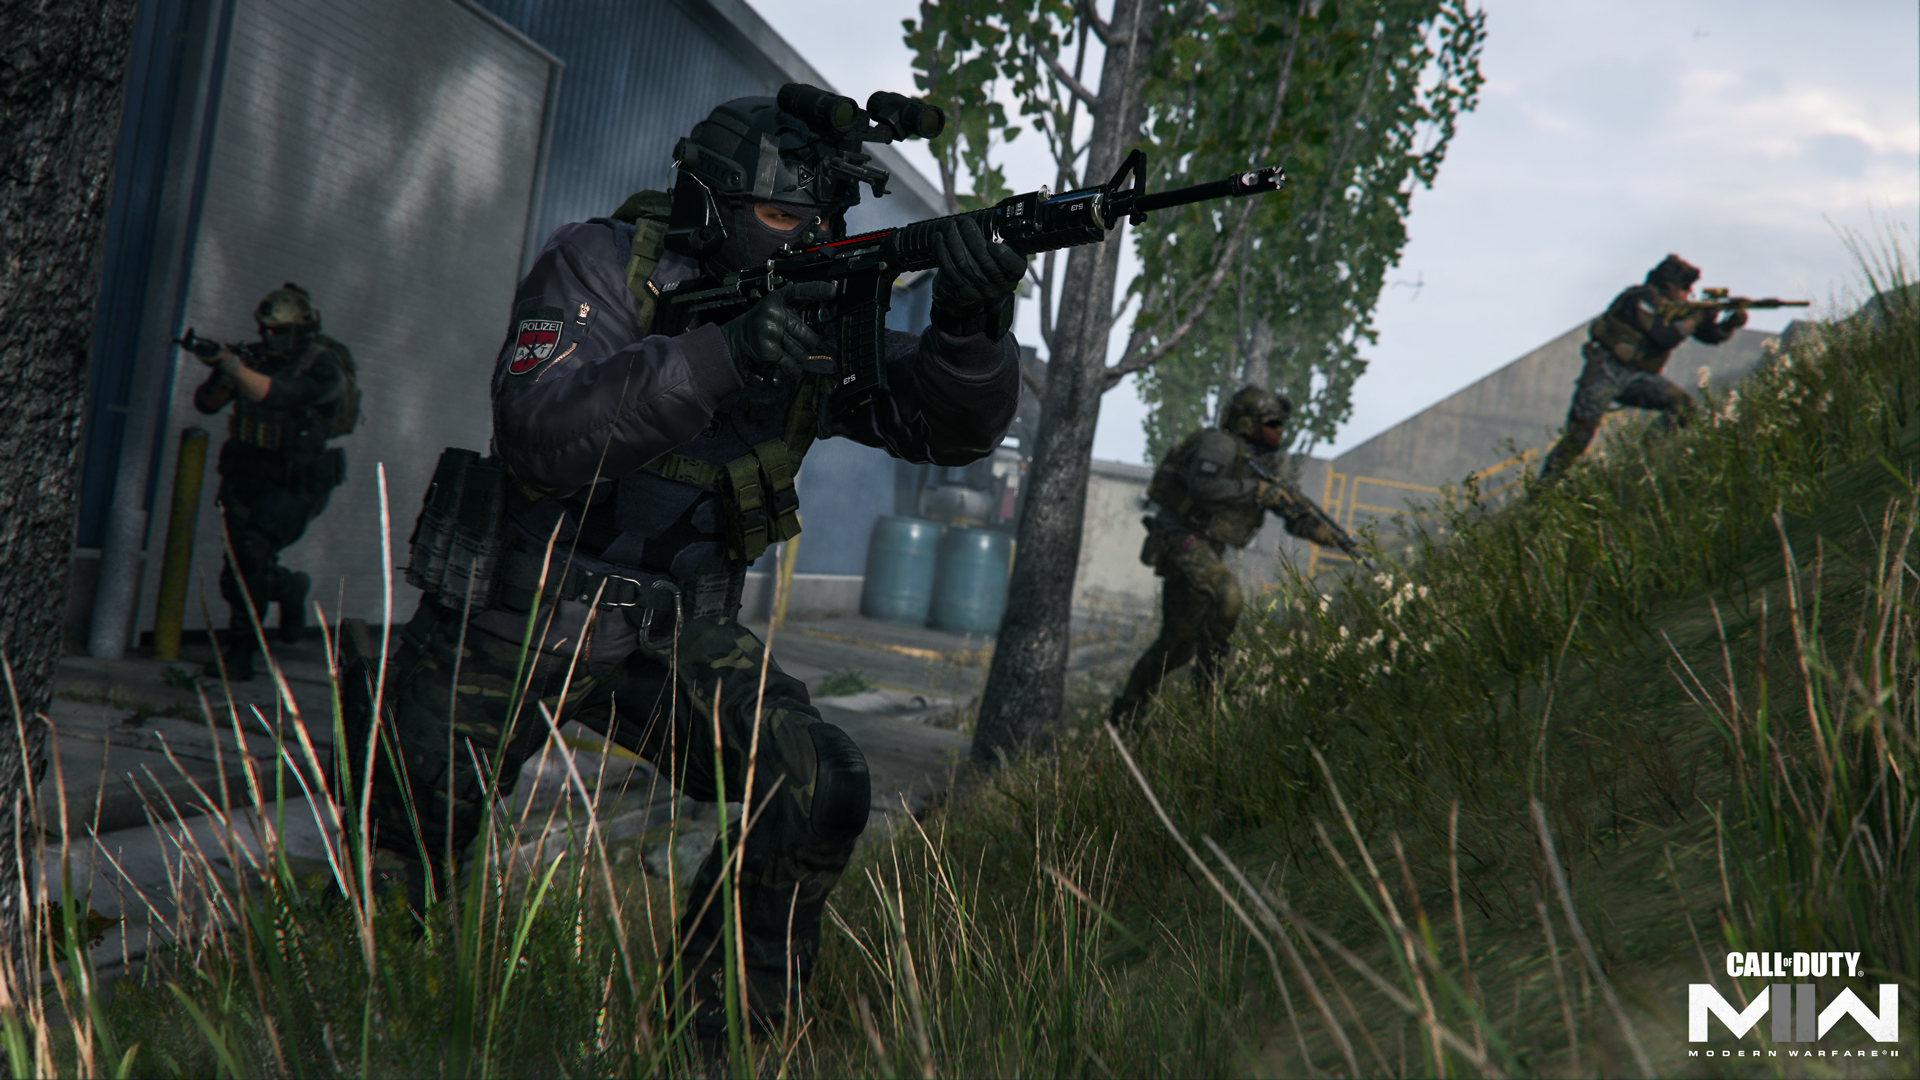 Call of Duty: Modern Warfare 2 and Warzone - All Season 6 Battle Pass  Content - Gameranx